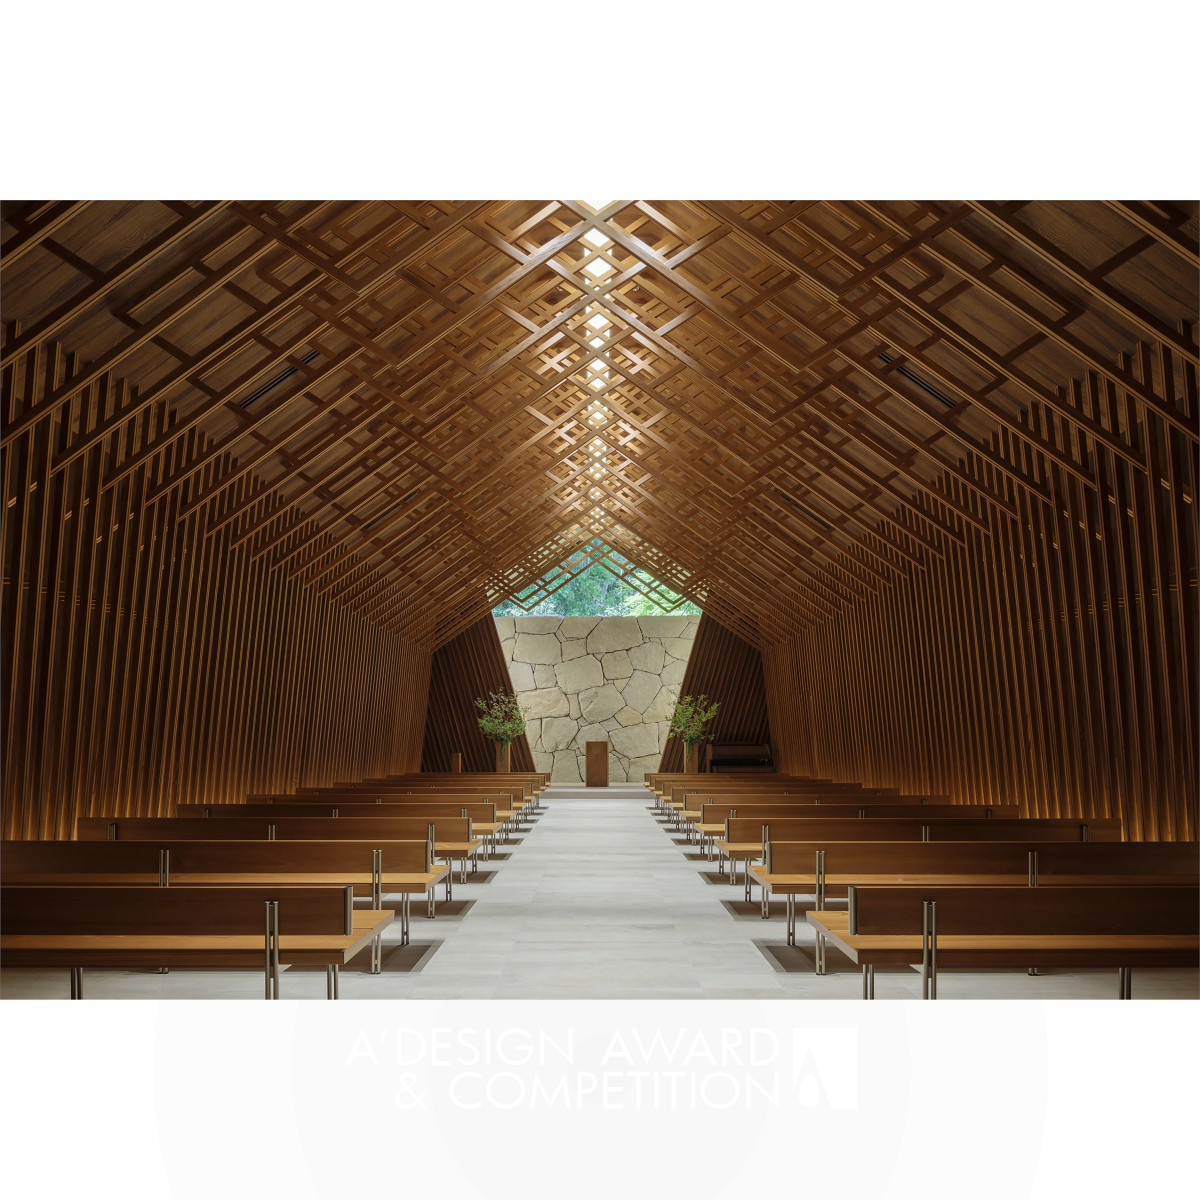 The Westin Miyako Kyoto Chapel Renovation by Katori archi + design associates